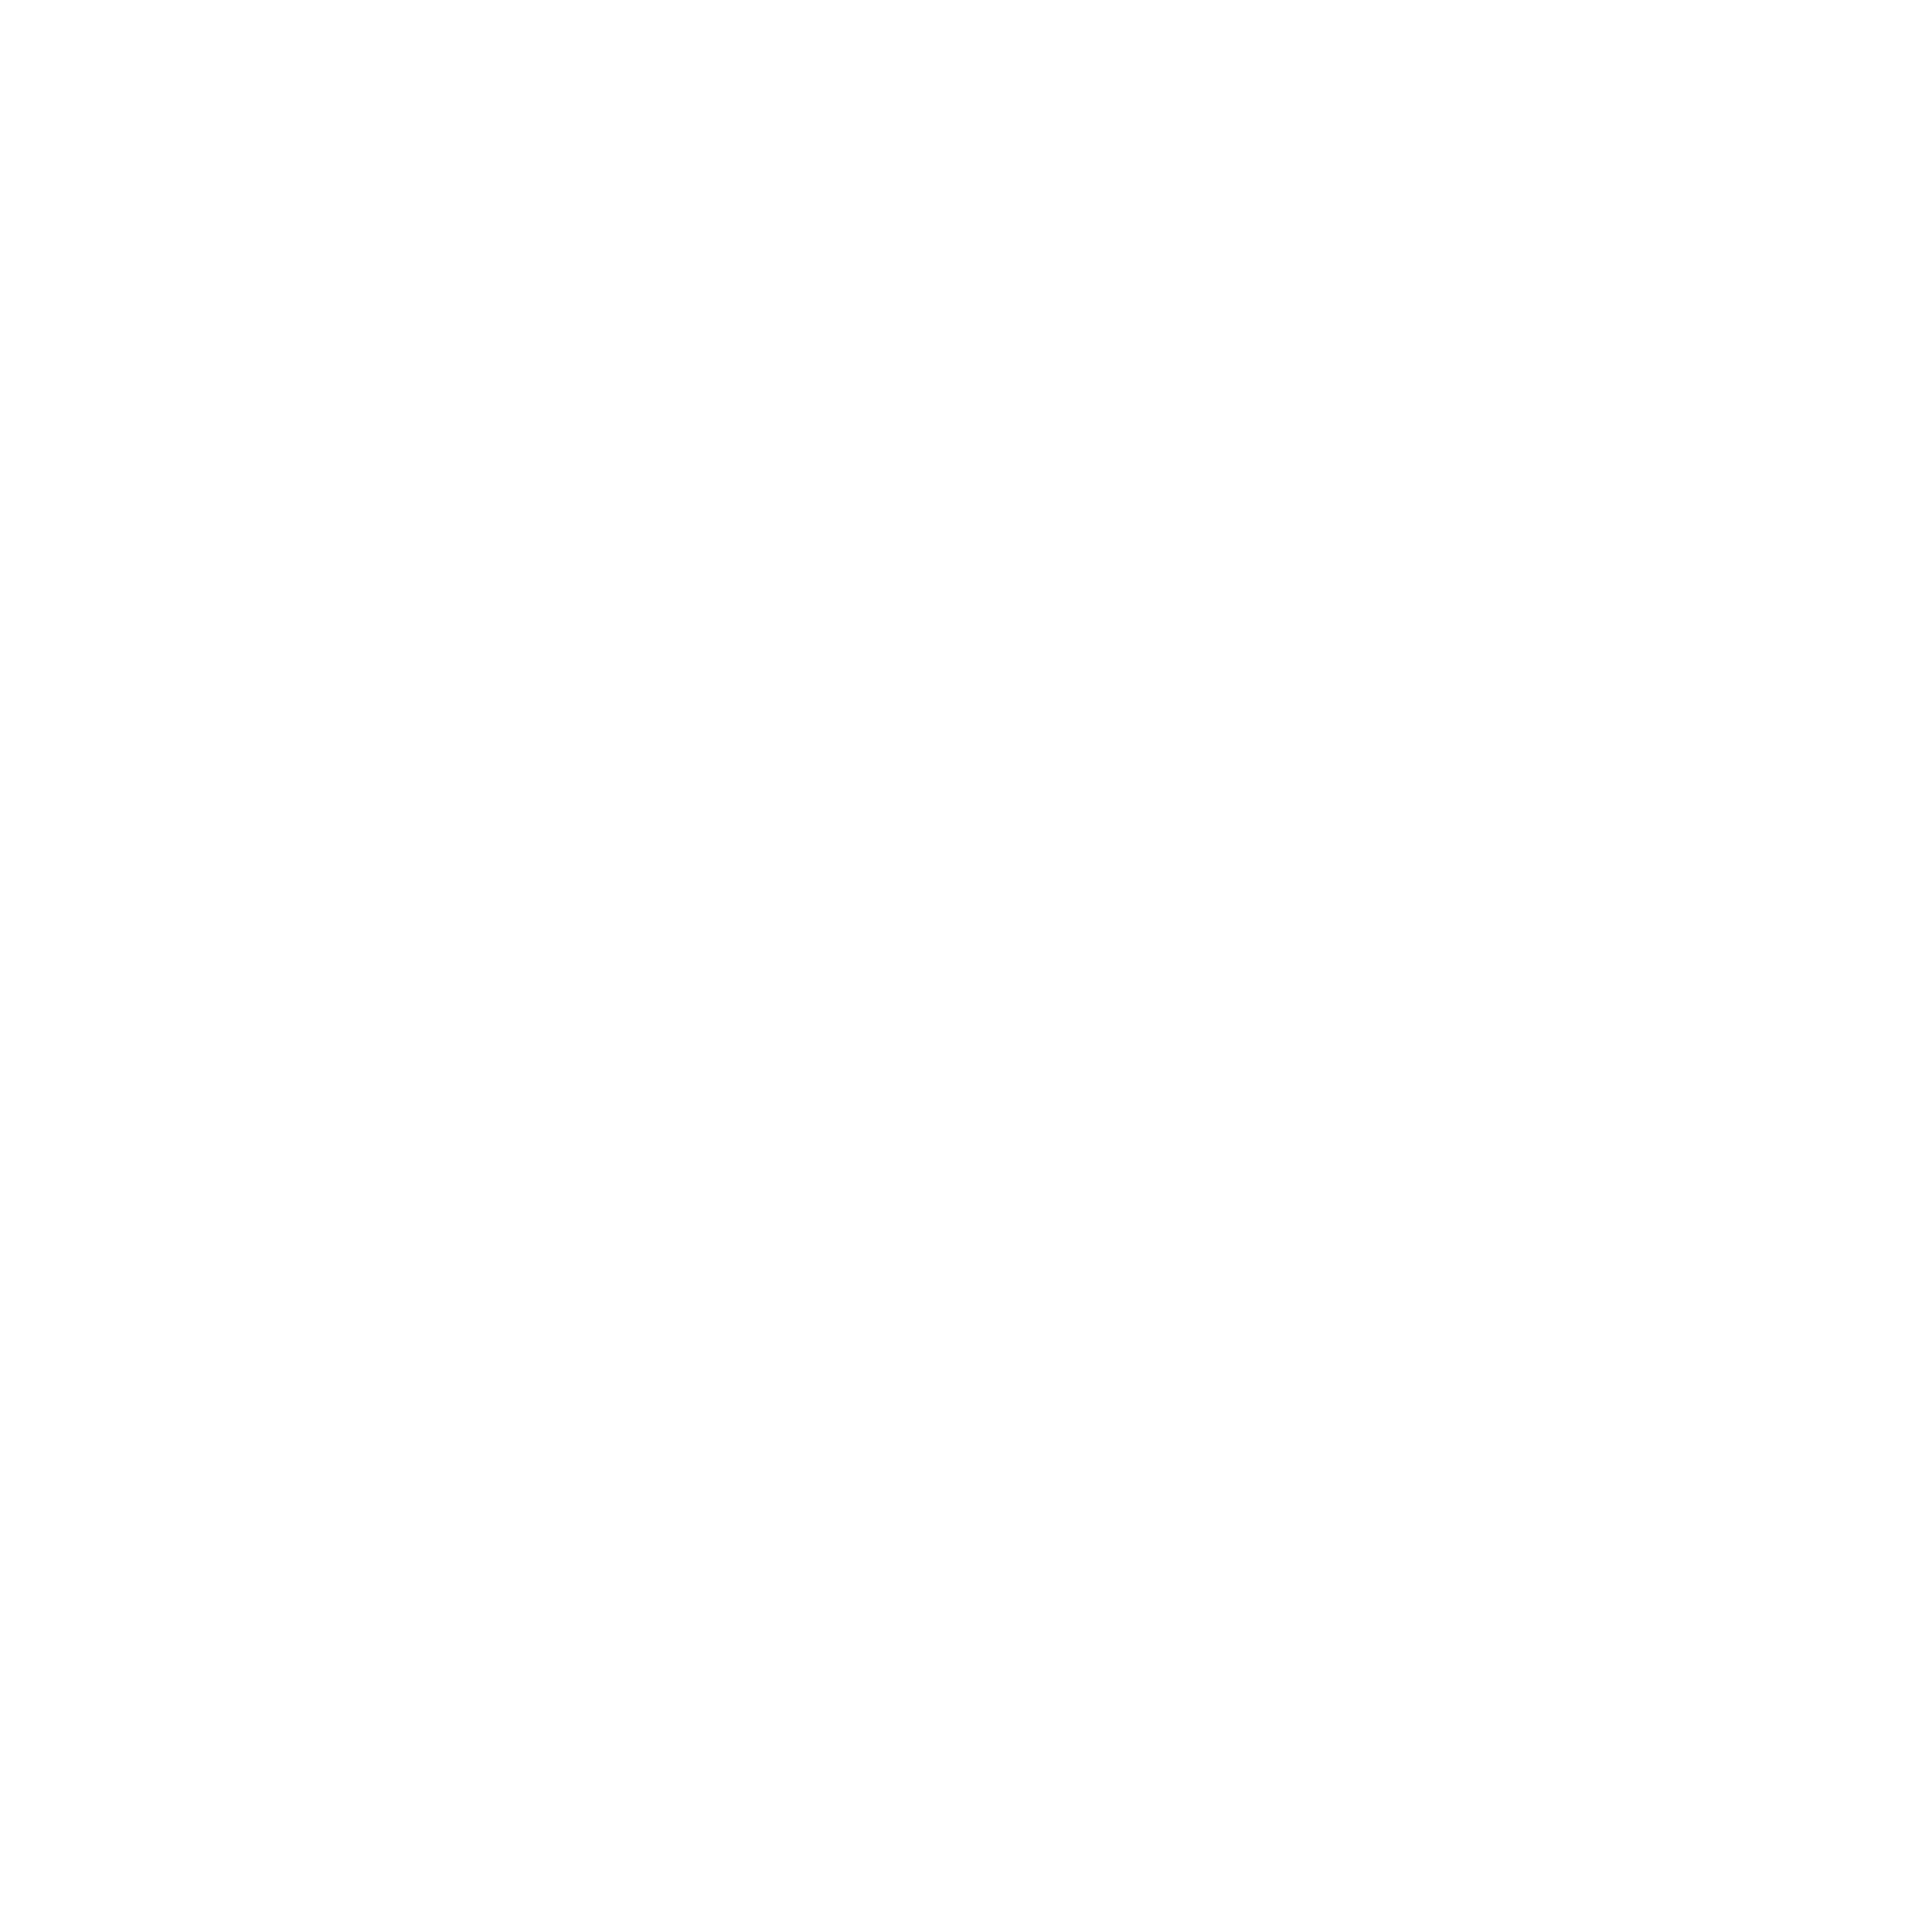 Lakeside-Kids-Speech-Pathology-Black-and-white-logo-white